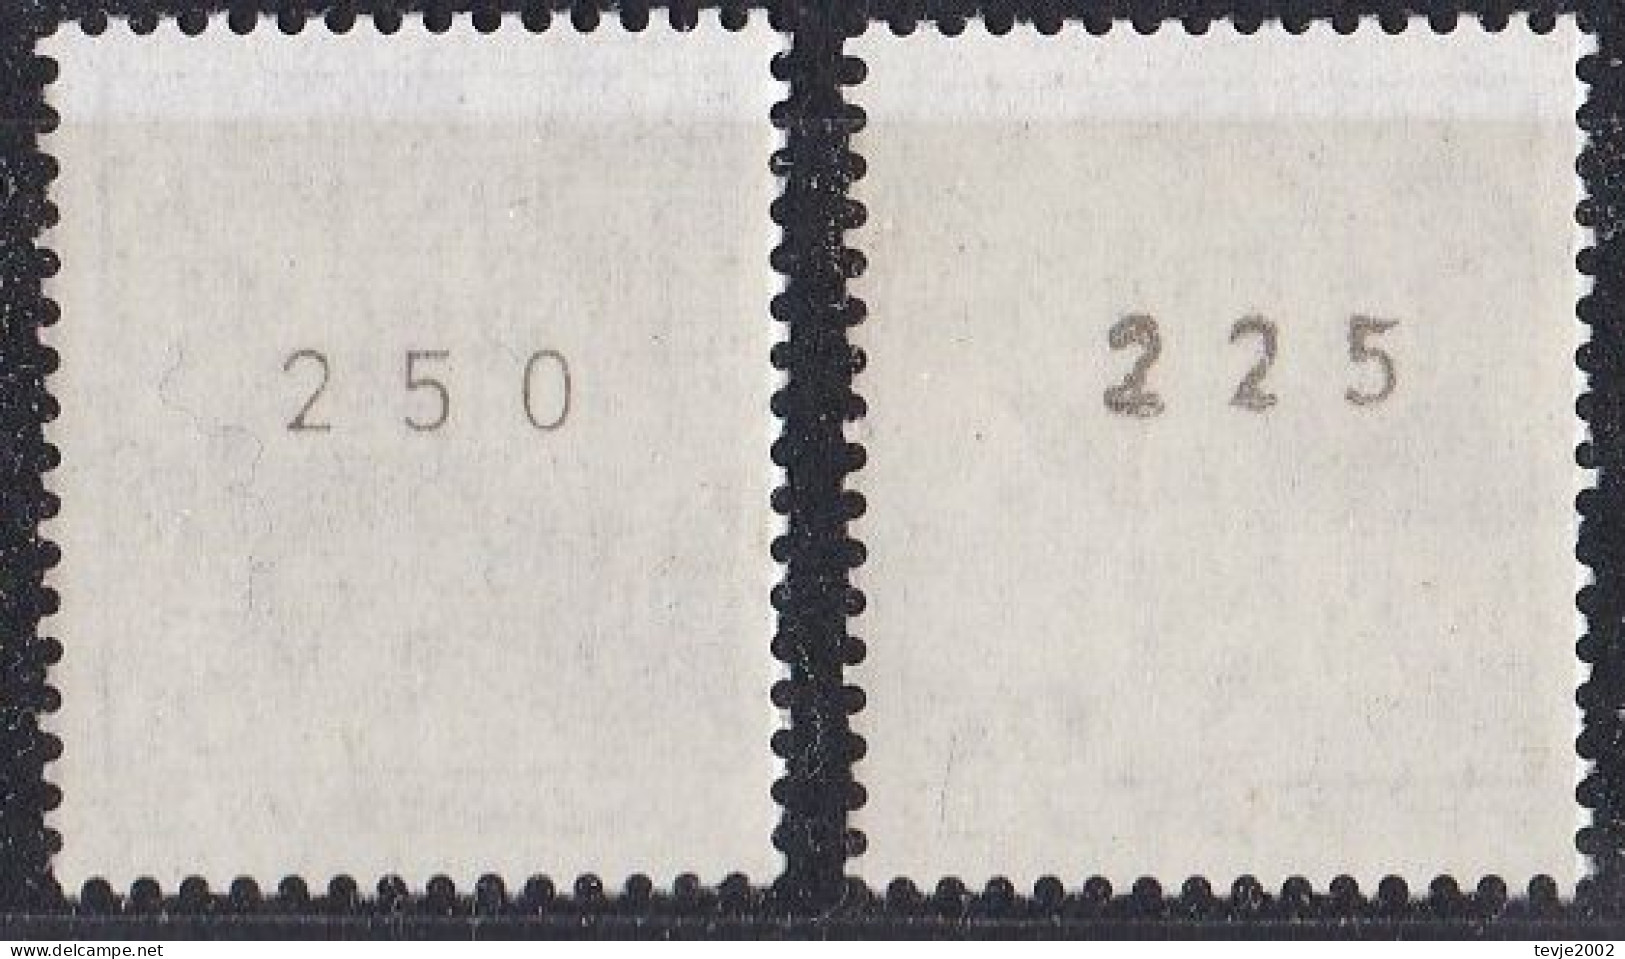 Berlin 1987 - Rollenmarken Mi.Nr. 532 AII + 534 AII - Postfrisch MNH - Letterset Mit Nummern - Roulettes